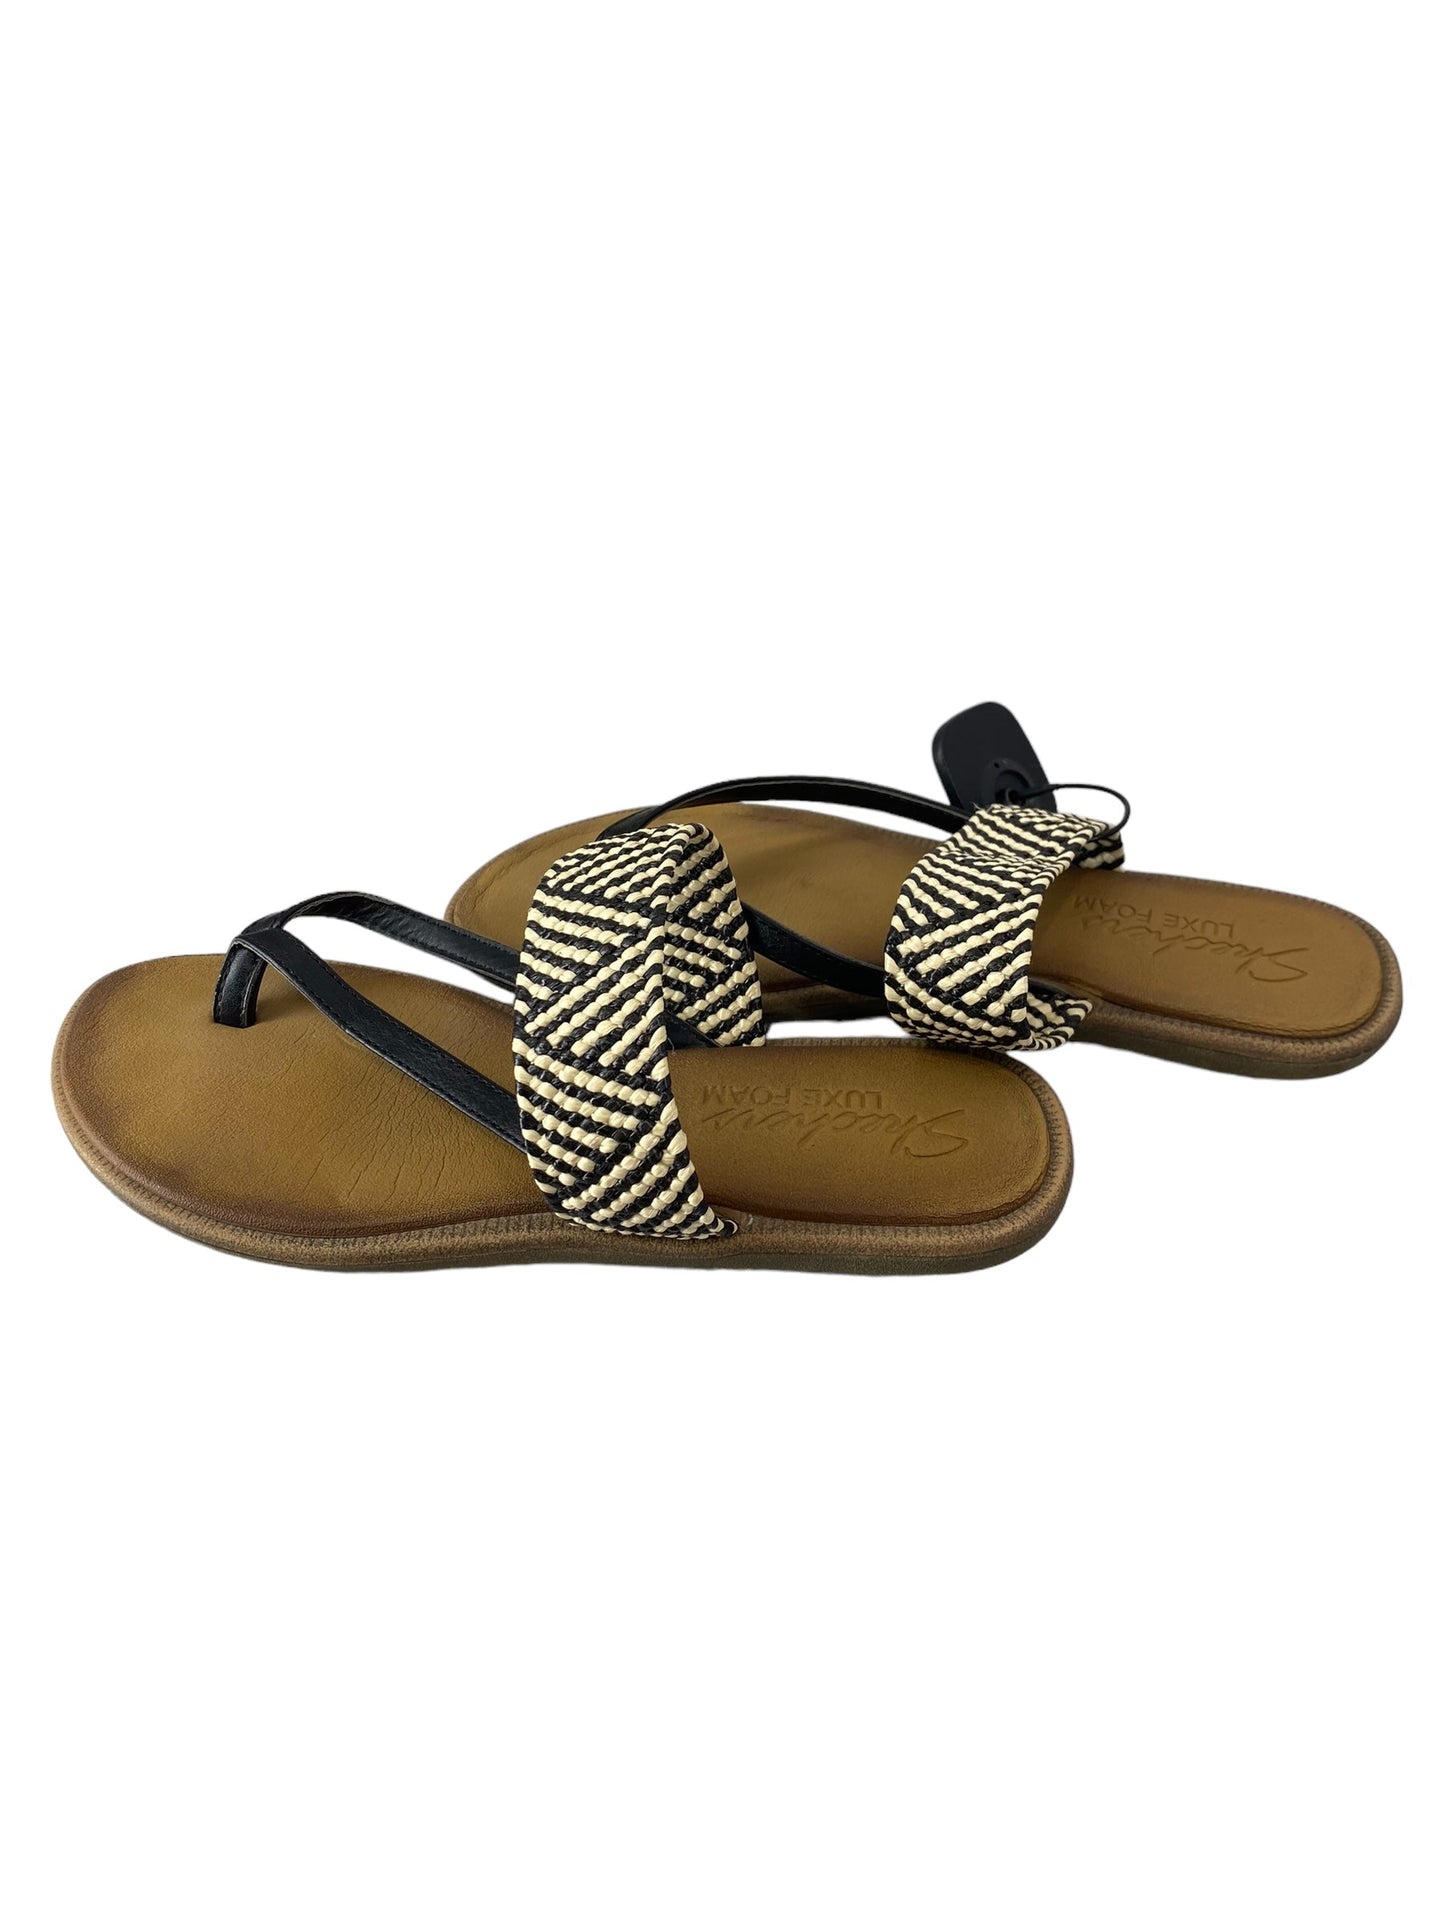 Black Sandals Flats Skechers, Size 8